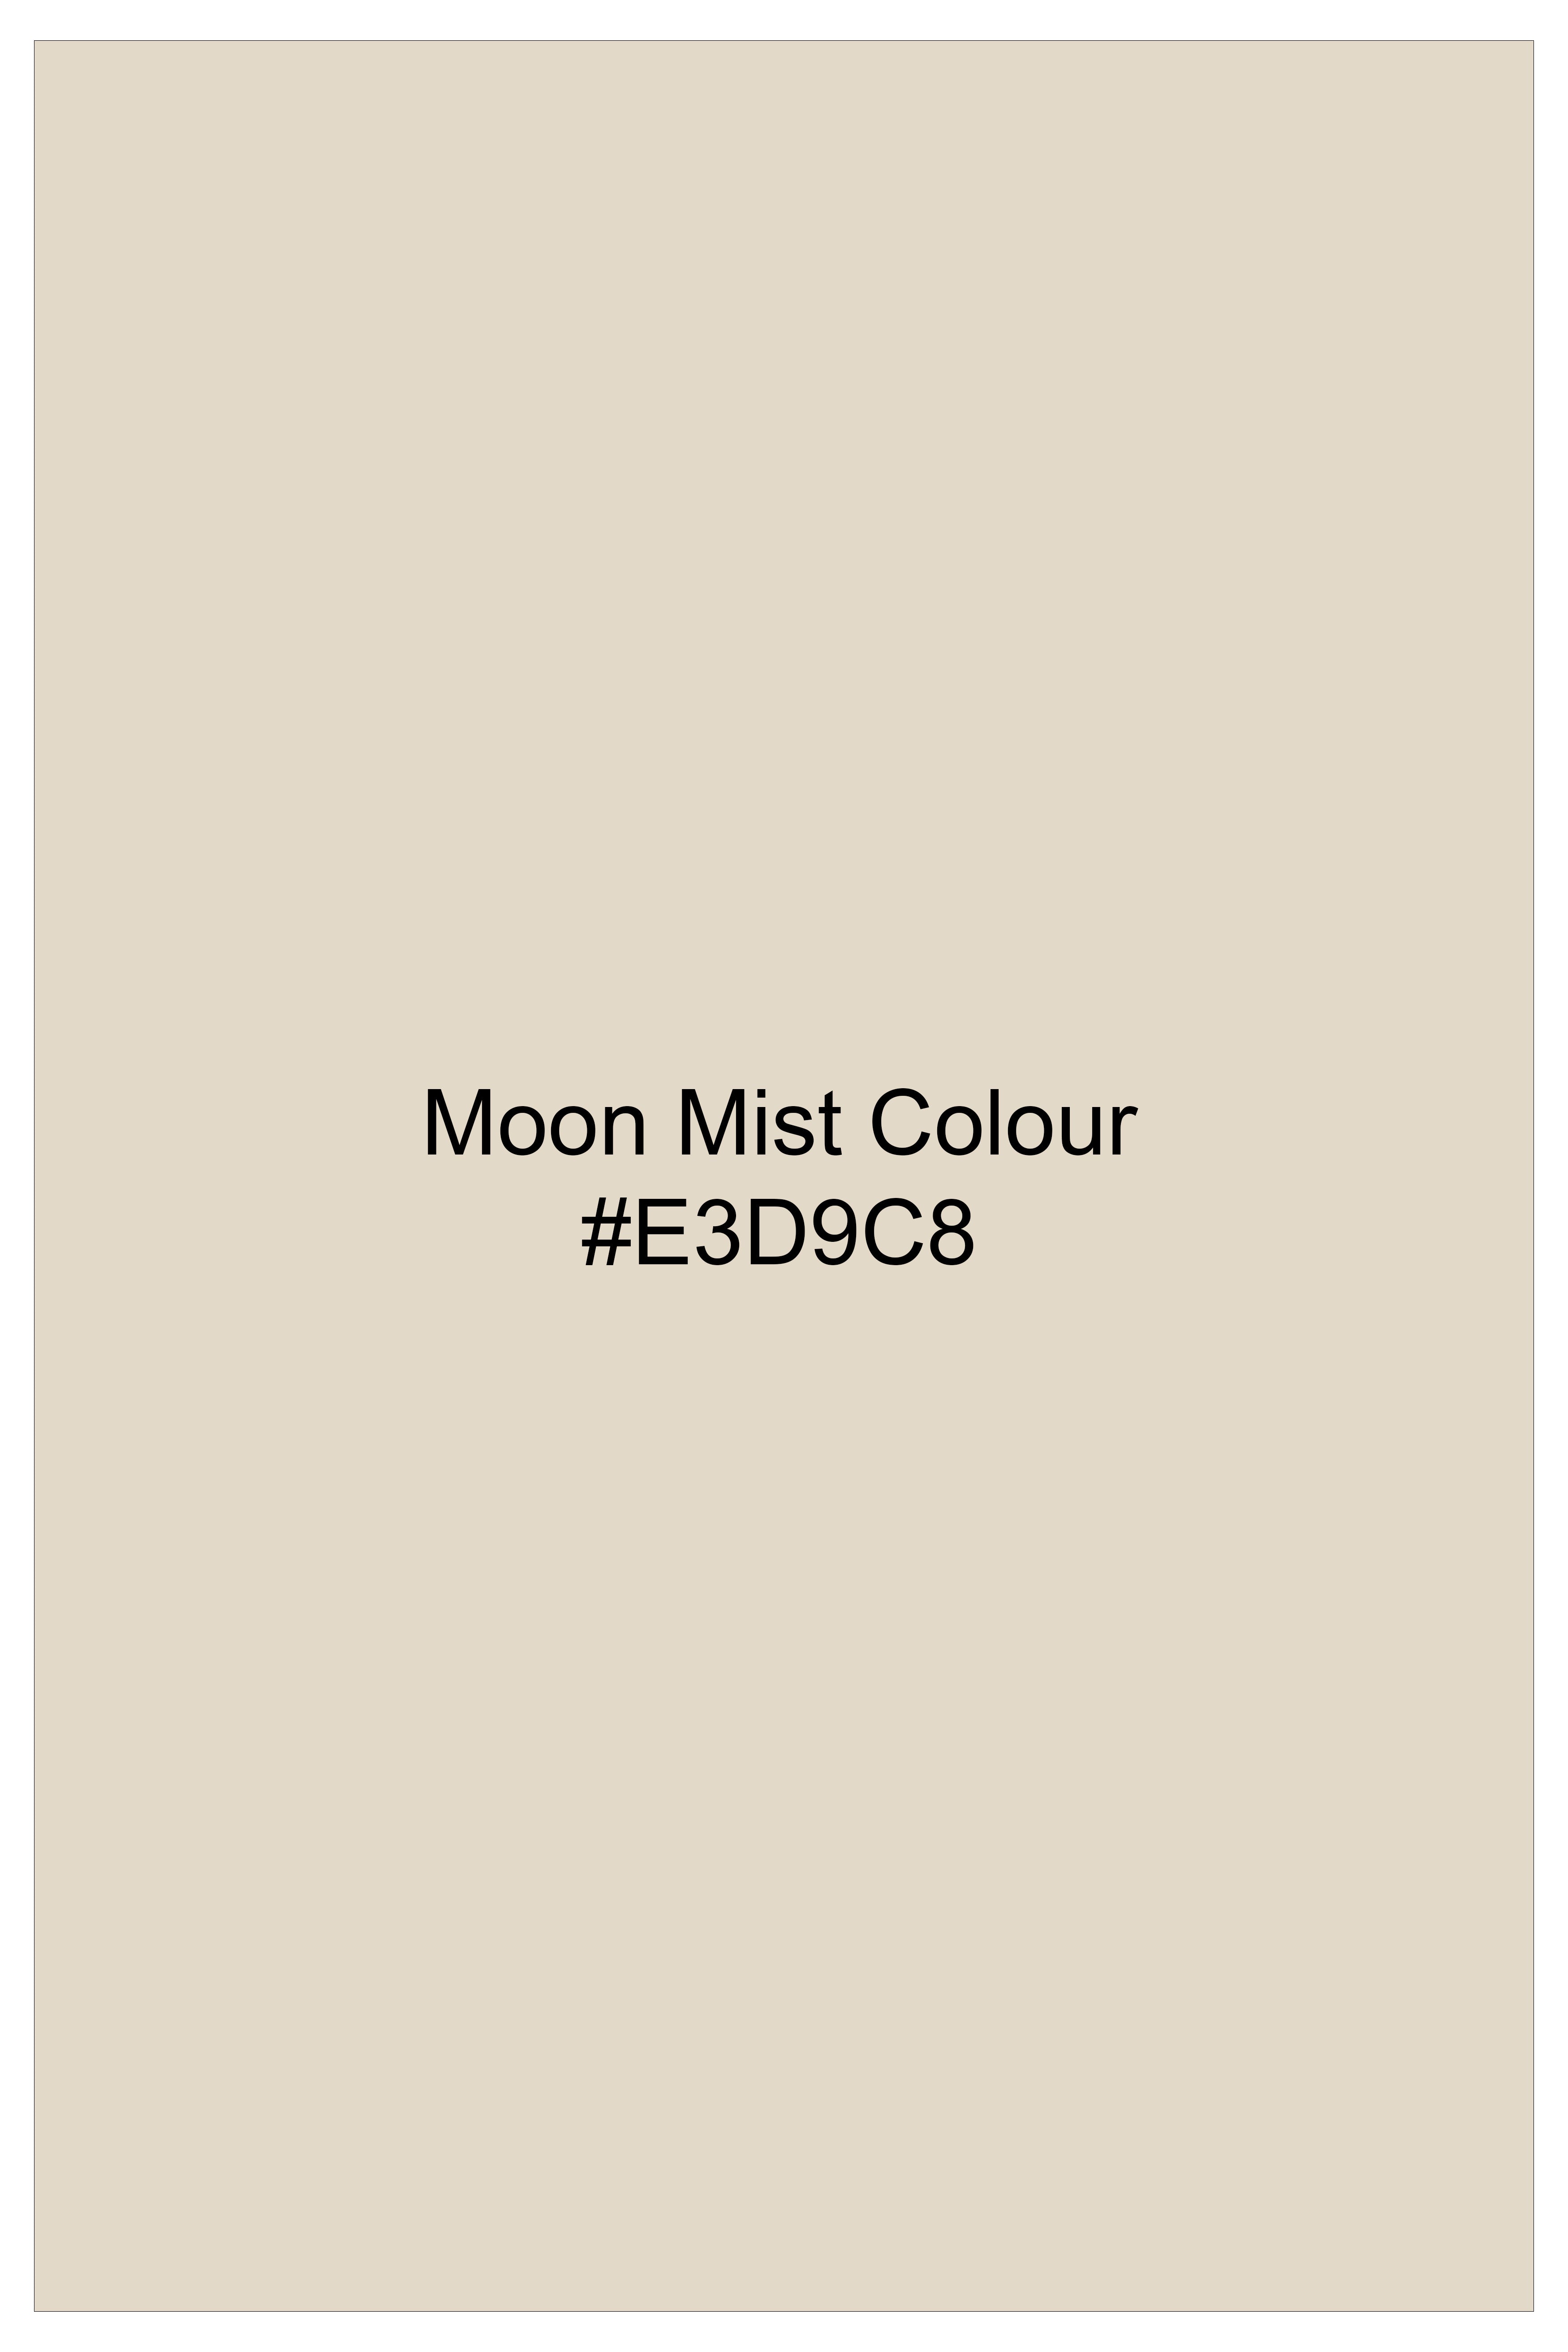 Moon Mist Cream Solid Wool Blend Tuxedo Suit